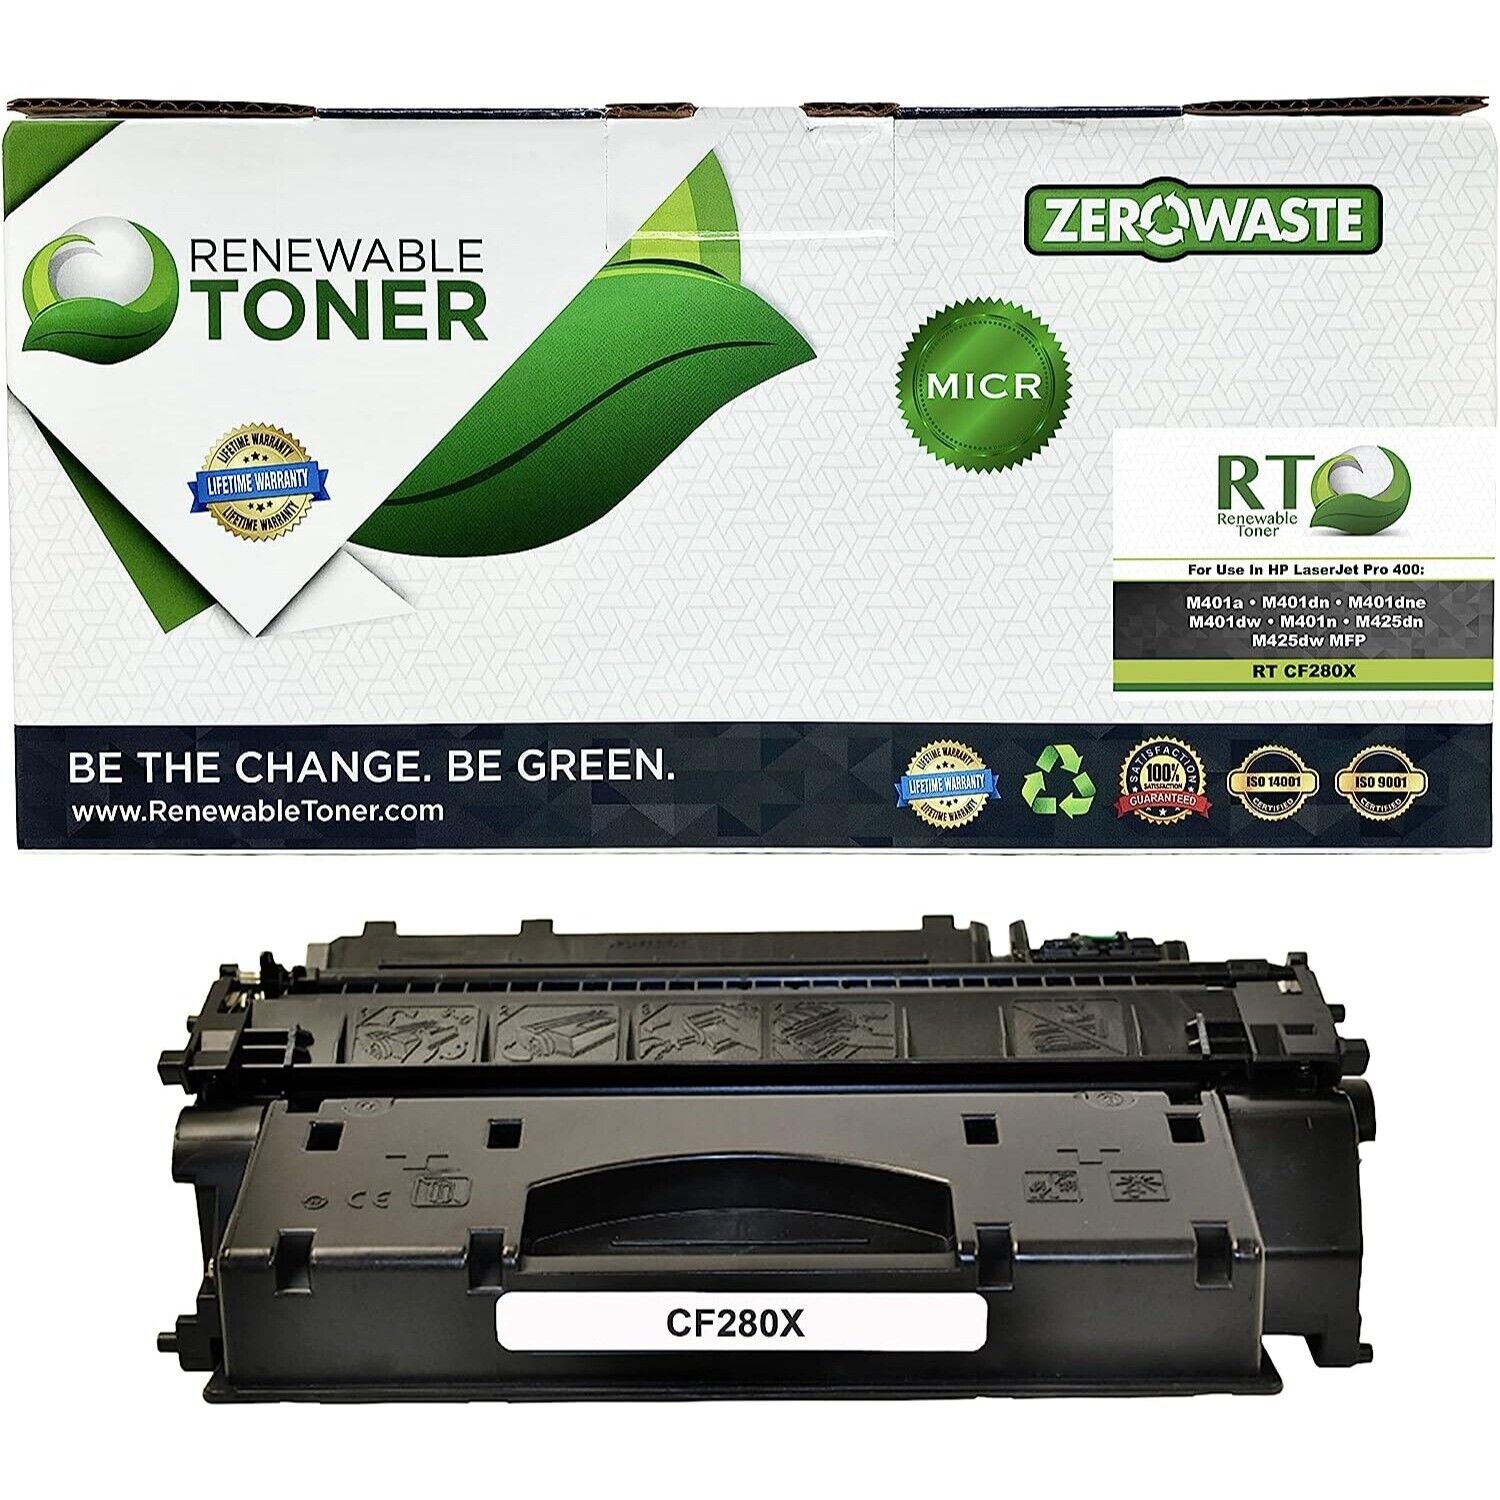 Renewable Toner Compatible High Yield MICR Toner Cartridge for HP CF280X